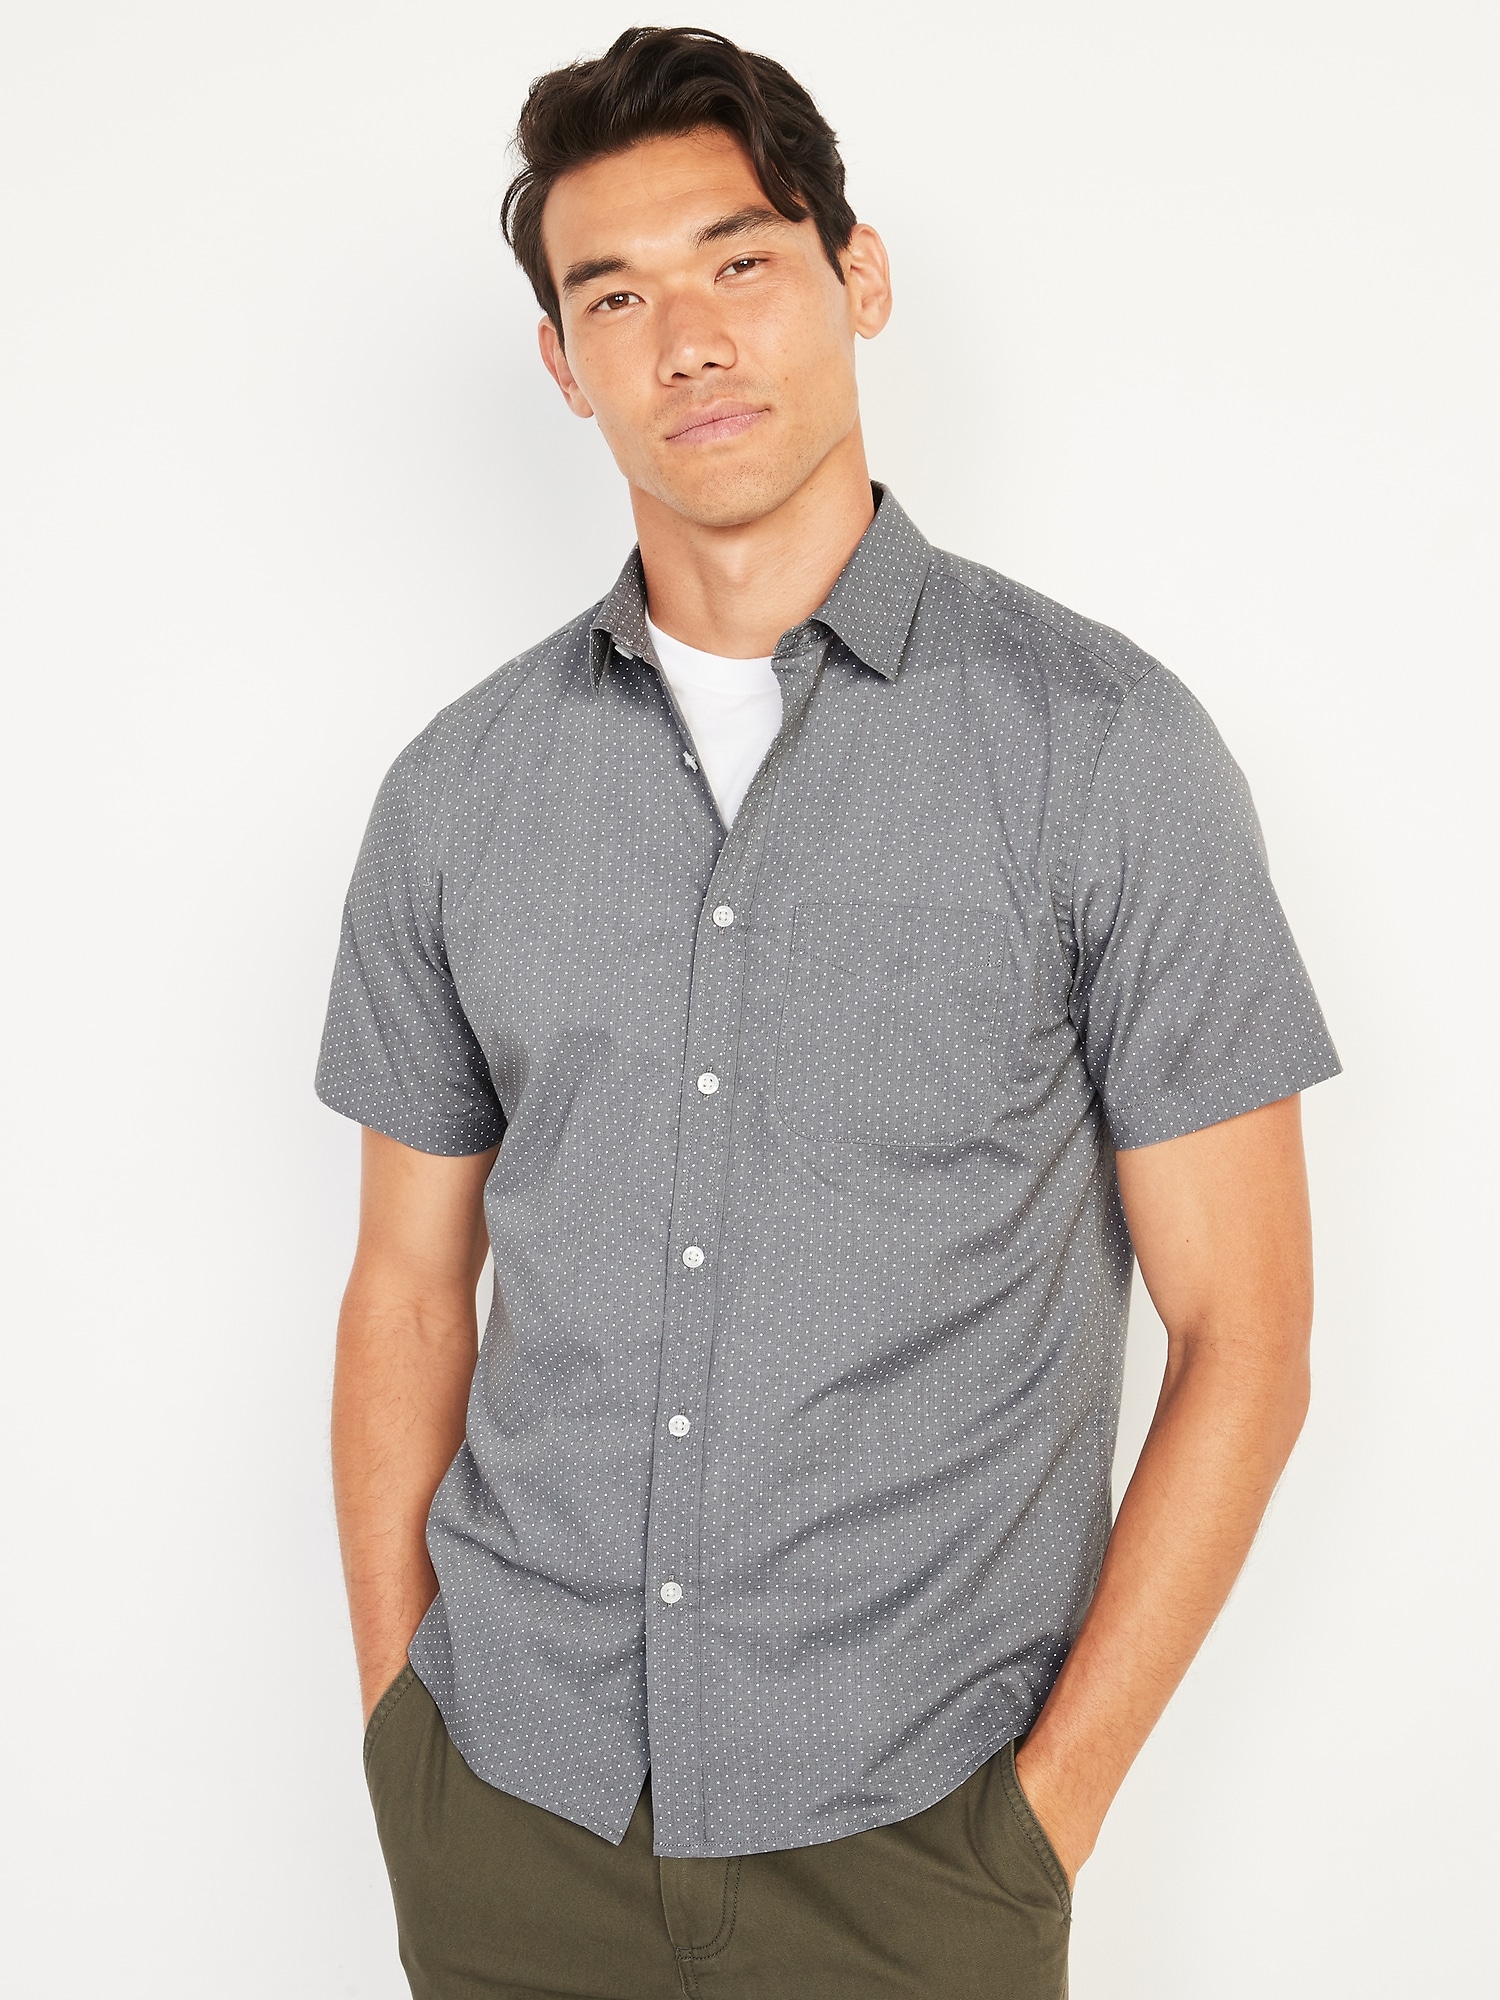 Printed Built-In Flex Everyday Short-Sleeve Shirt for Men | Old Navy